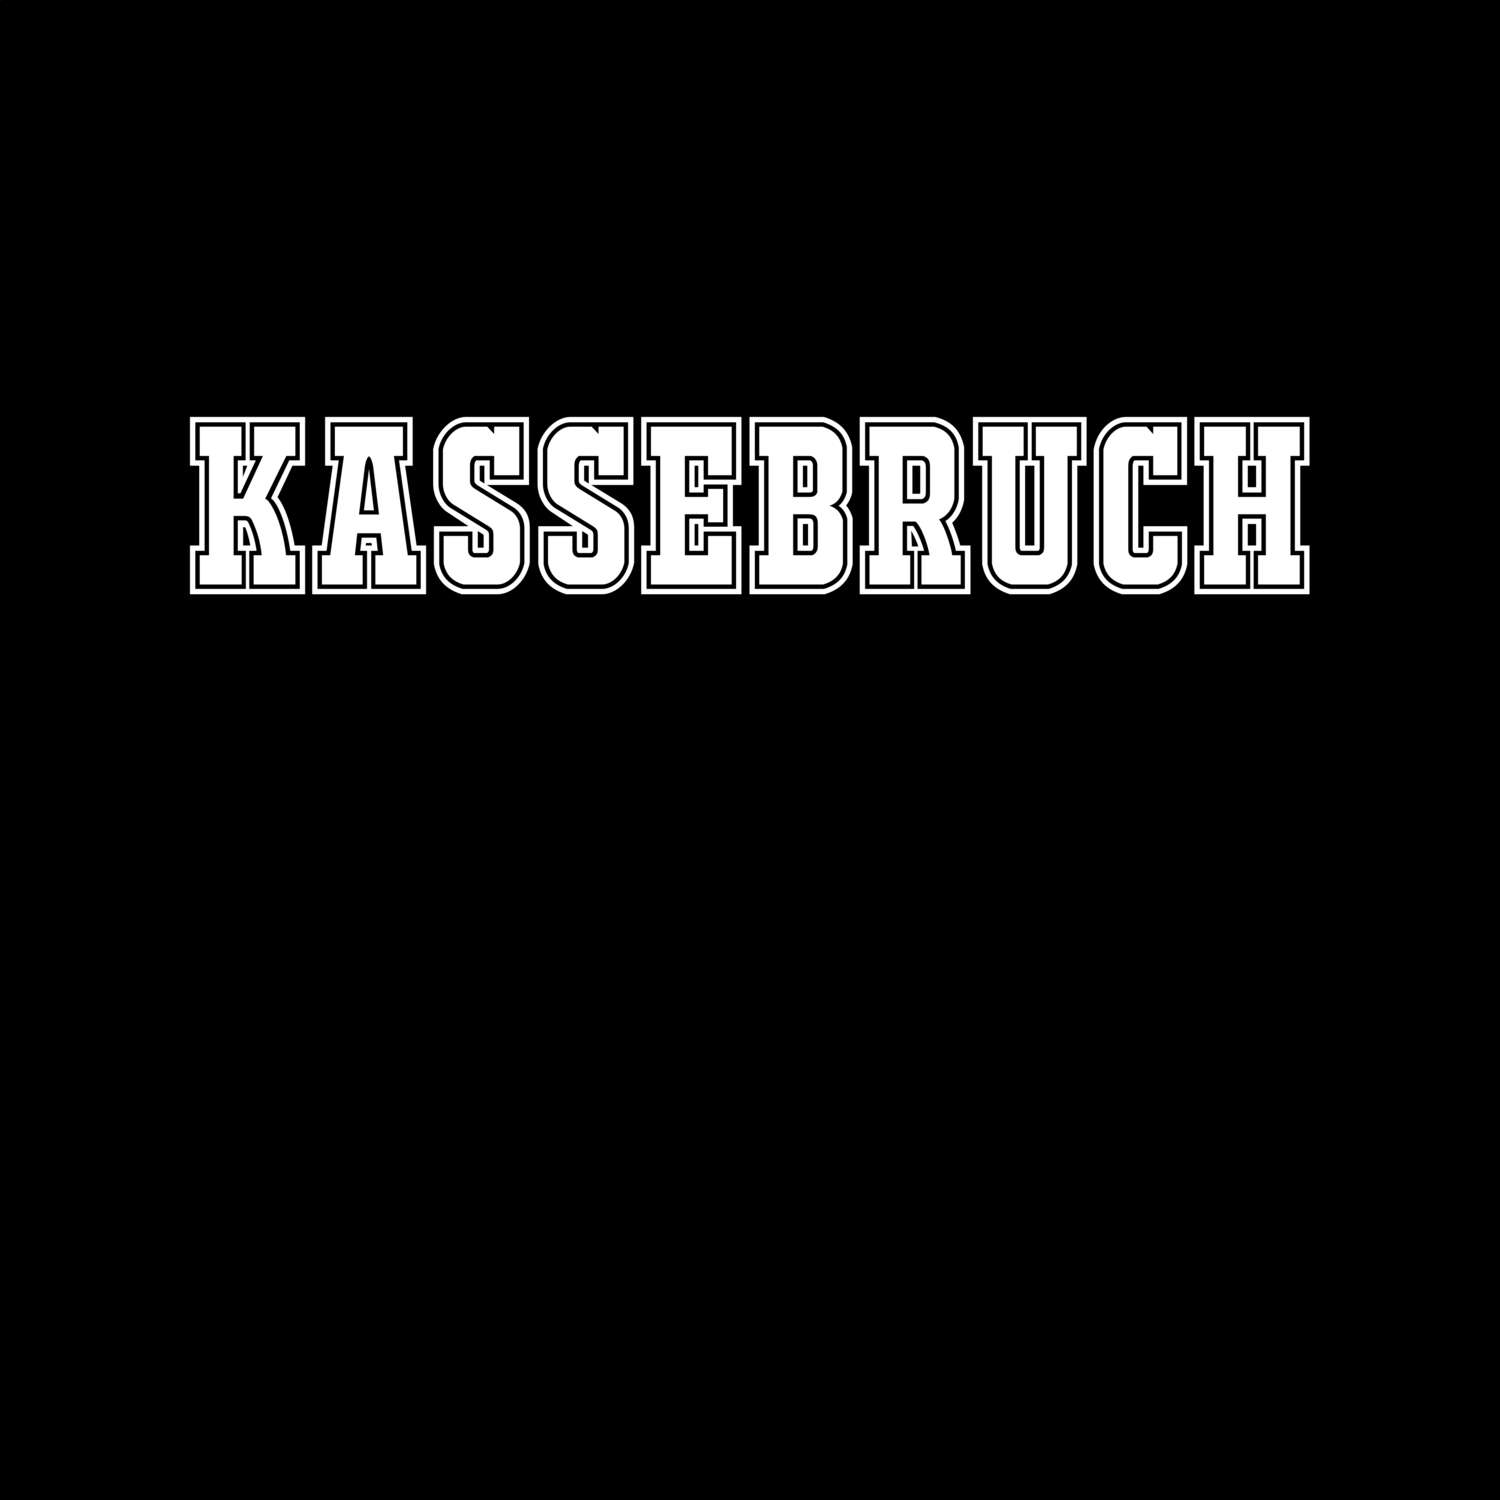 Kassebruch T-Shirt »Classic«